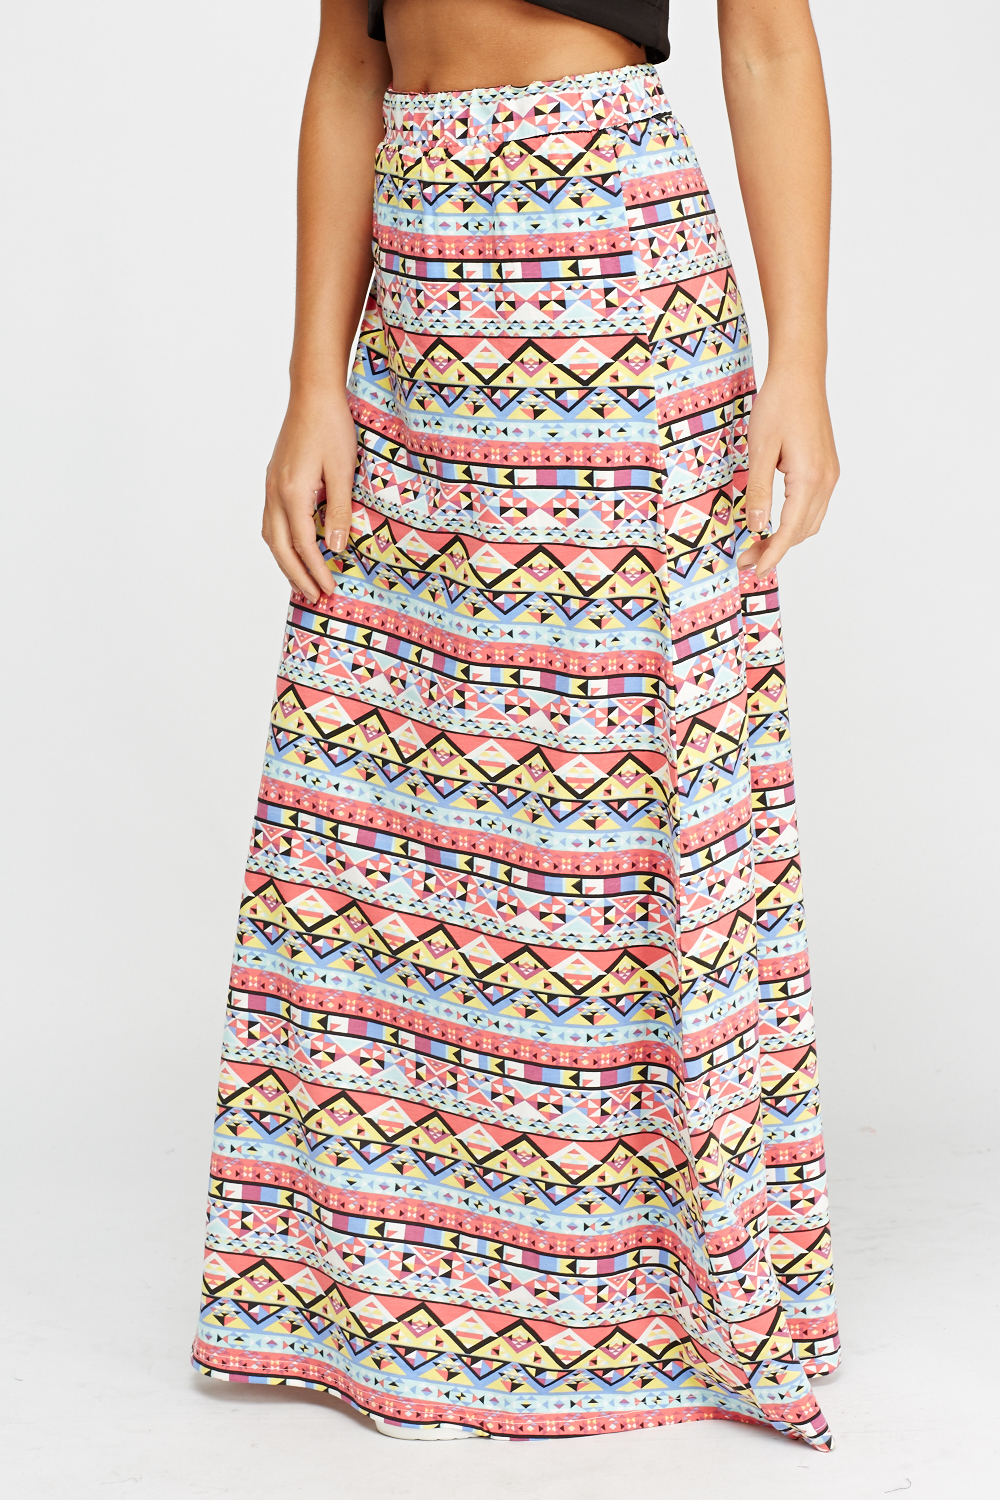 Aztec Print Maxi Skirt - Just $7